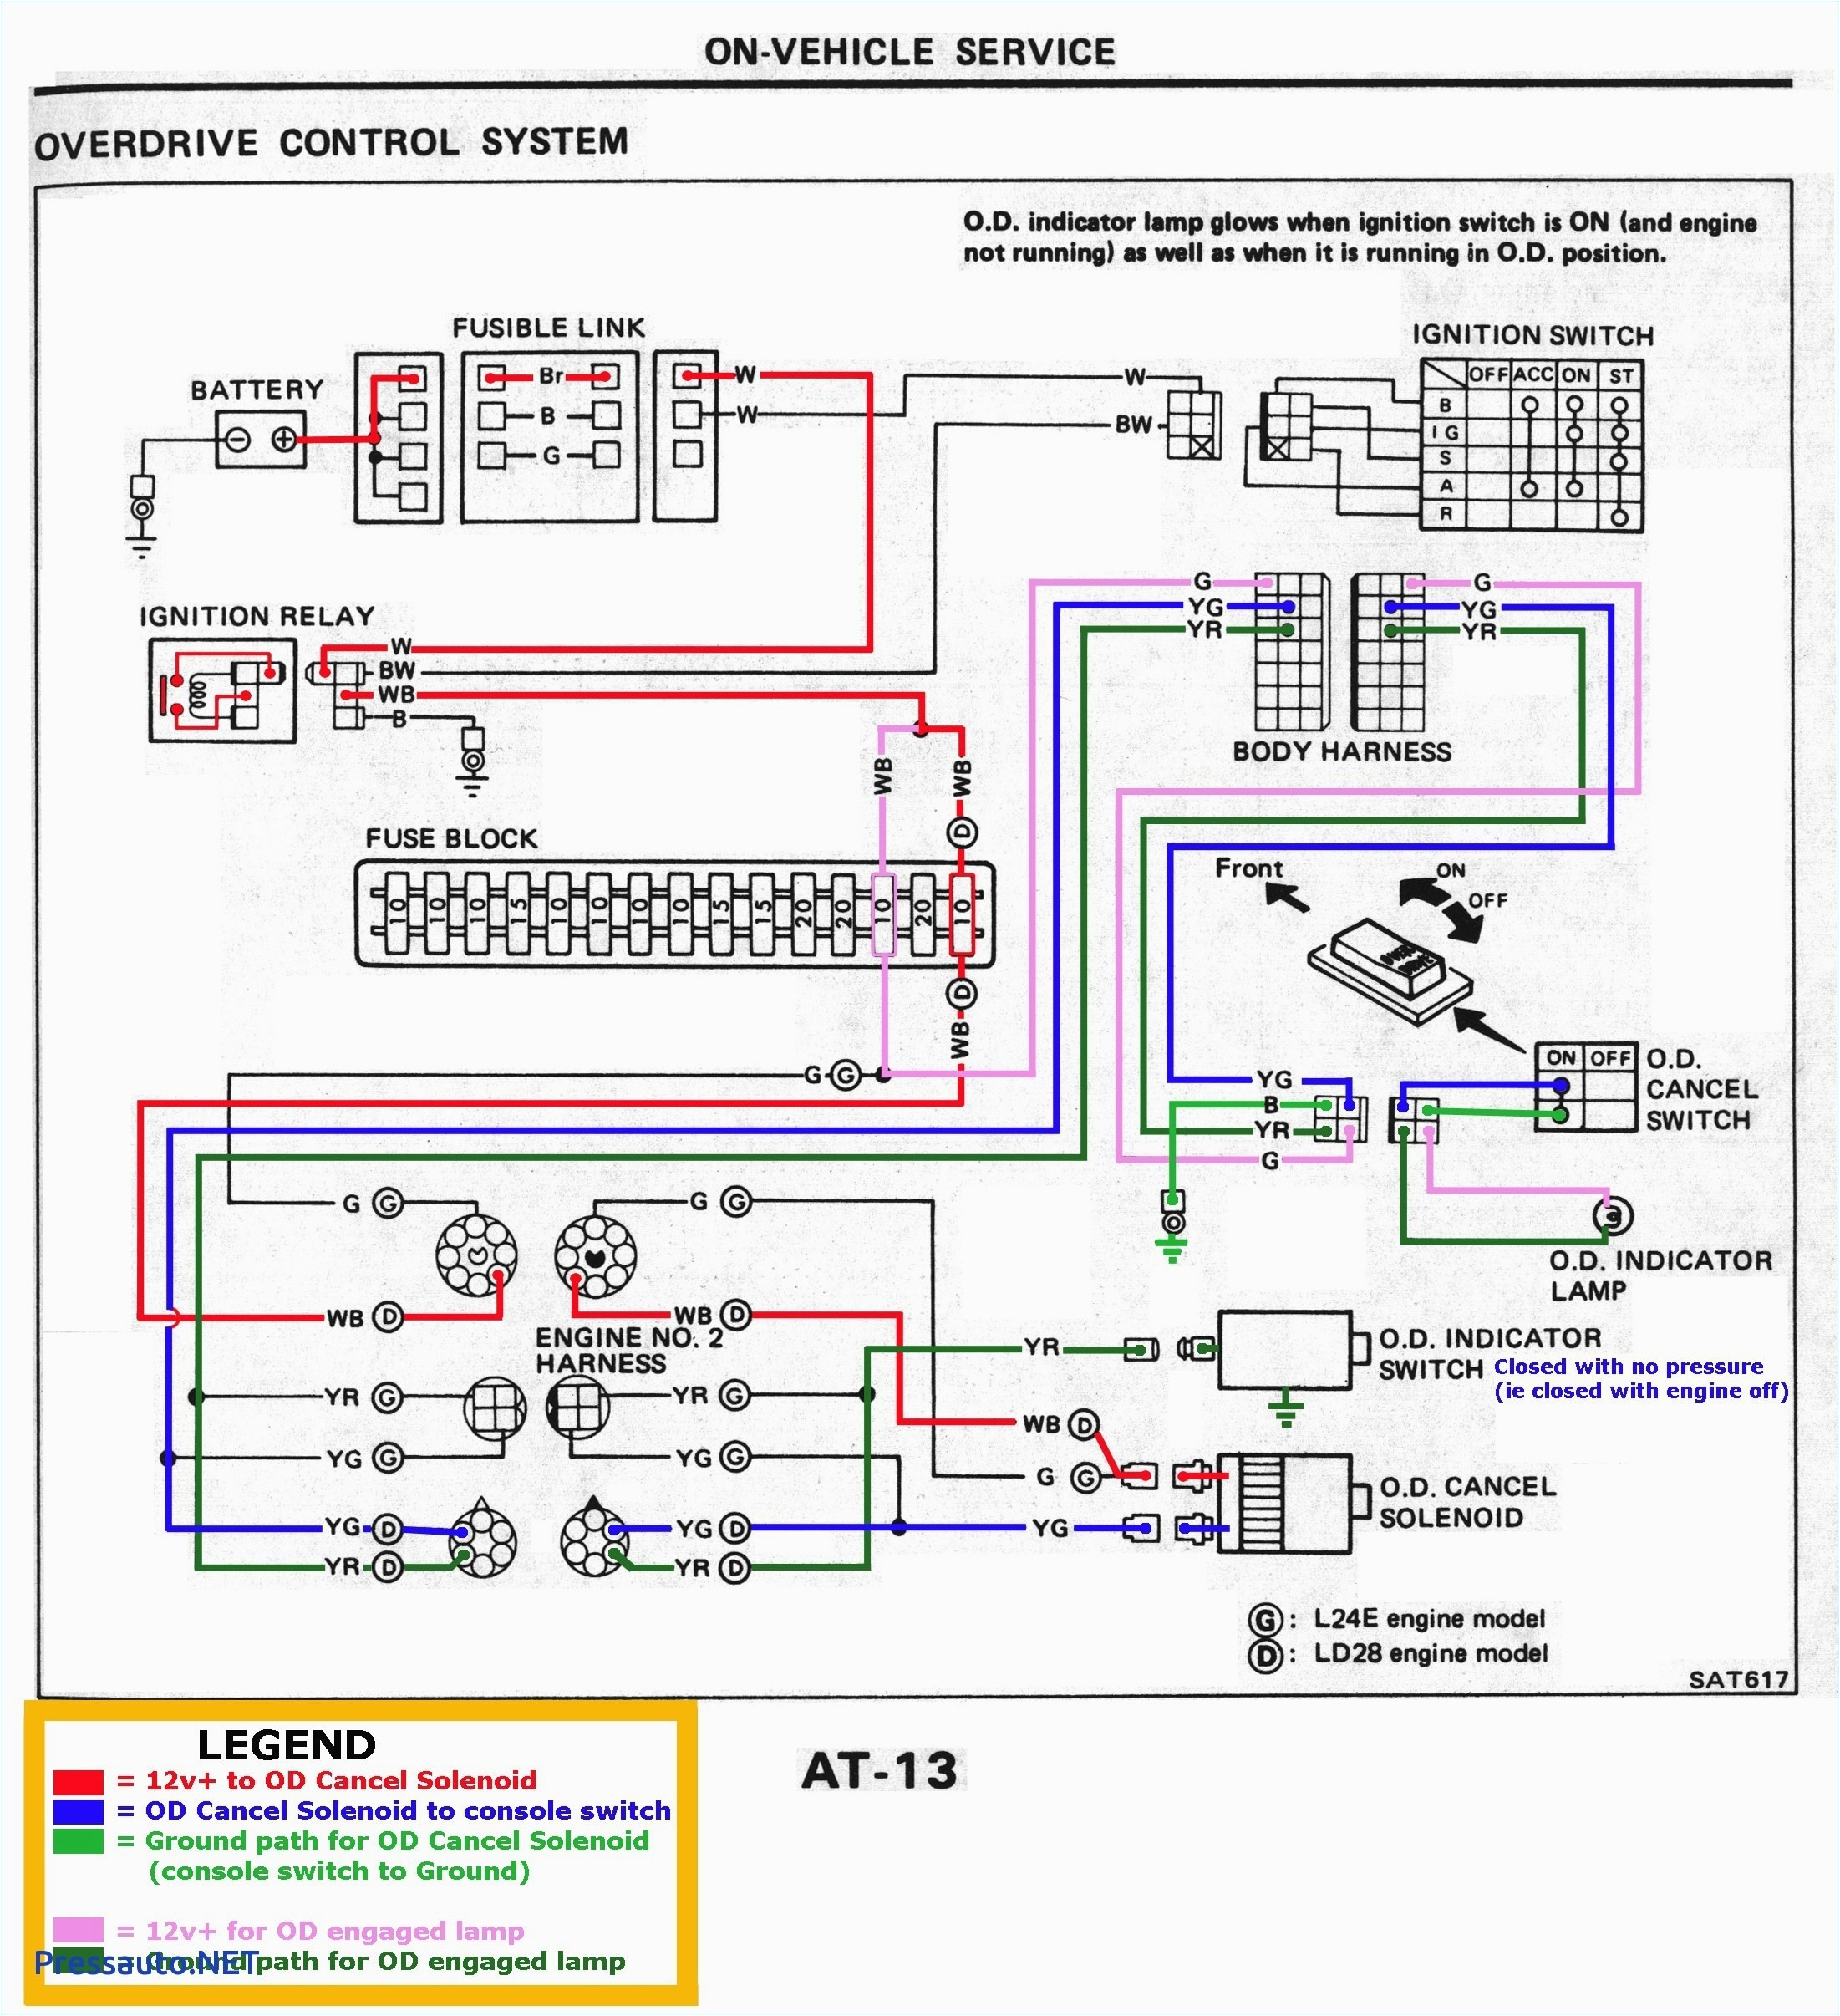 Directed Db3 Wiring Diagram 01 Ram Headlight Wiring Diagram Wiring Diagram